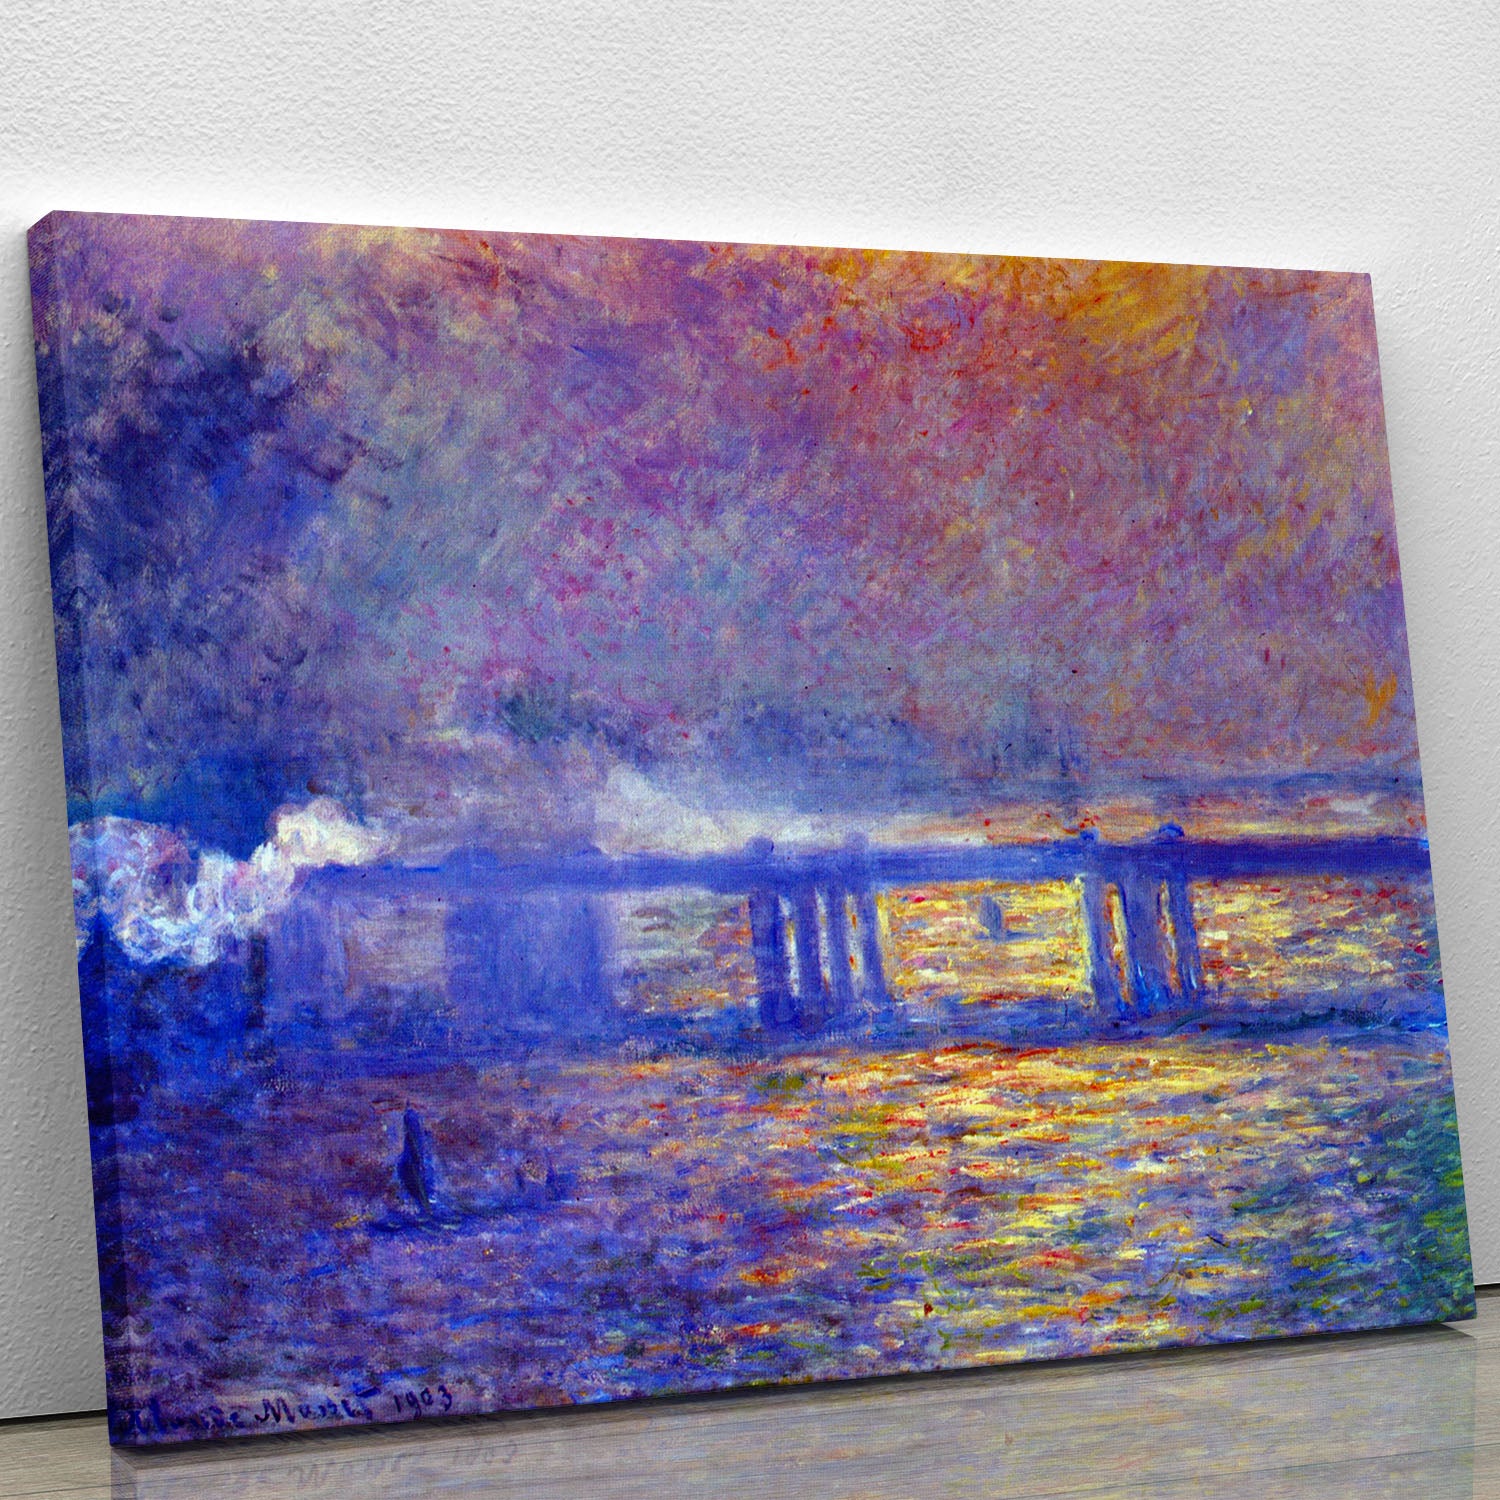 Charing cross bridge by Monet Canvas Print or Poster - Canvas Art Rocks - 1